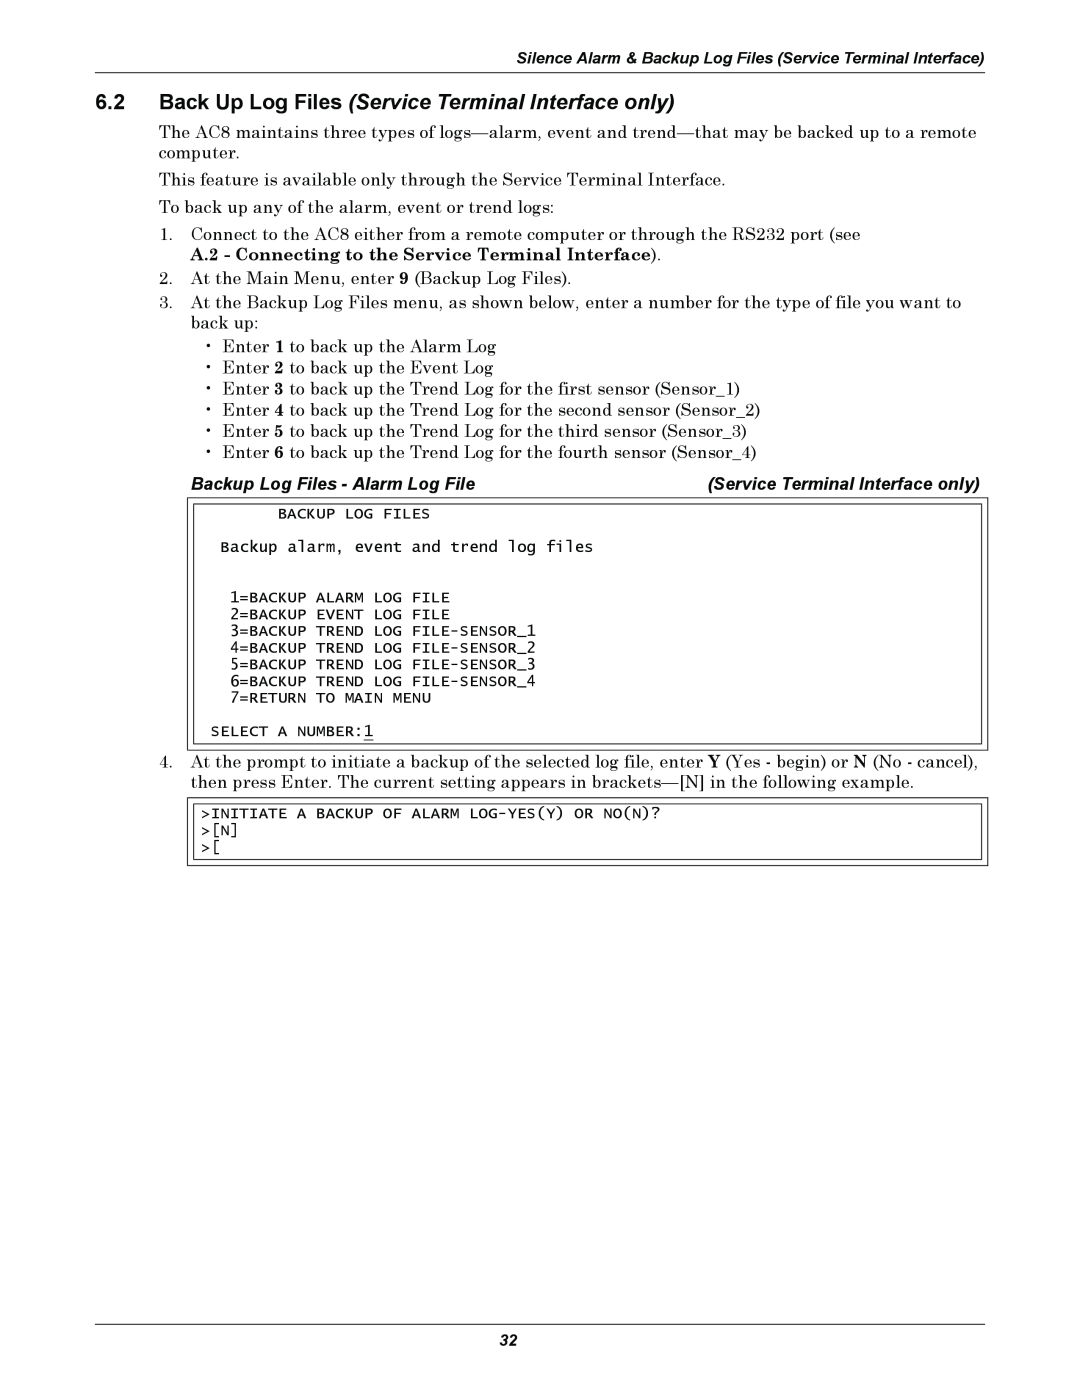 Emerson AC8 user manual Backup Log Files - Alarm Log File, Service Terminal Interface only 